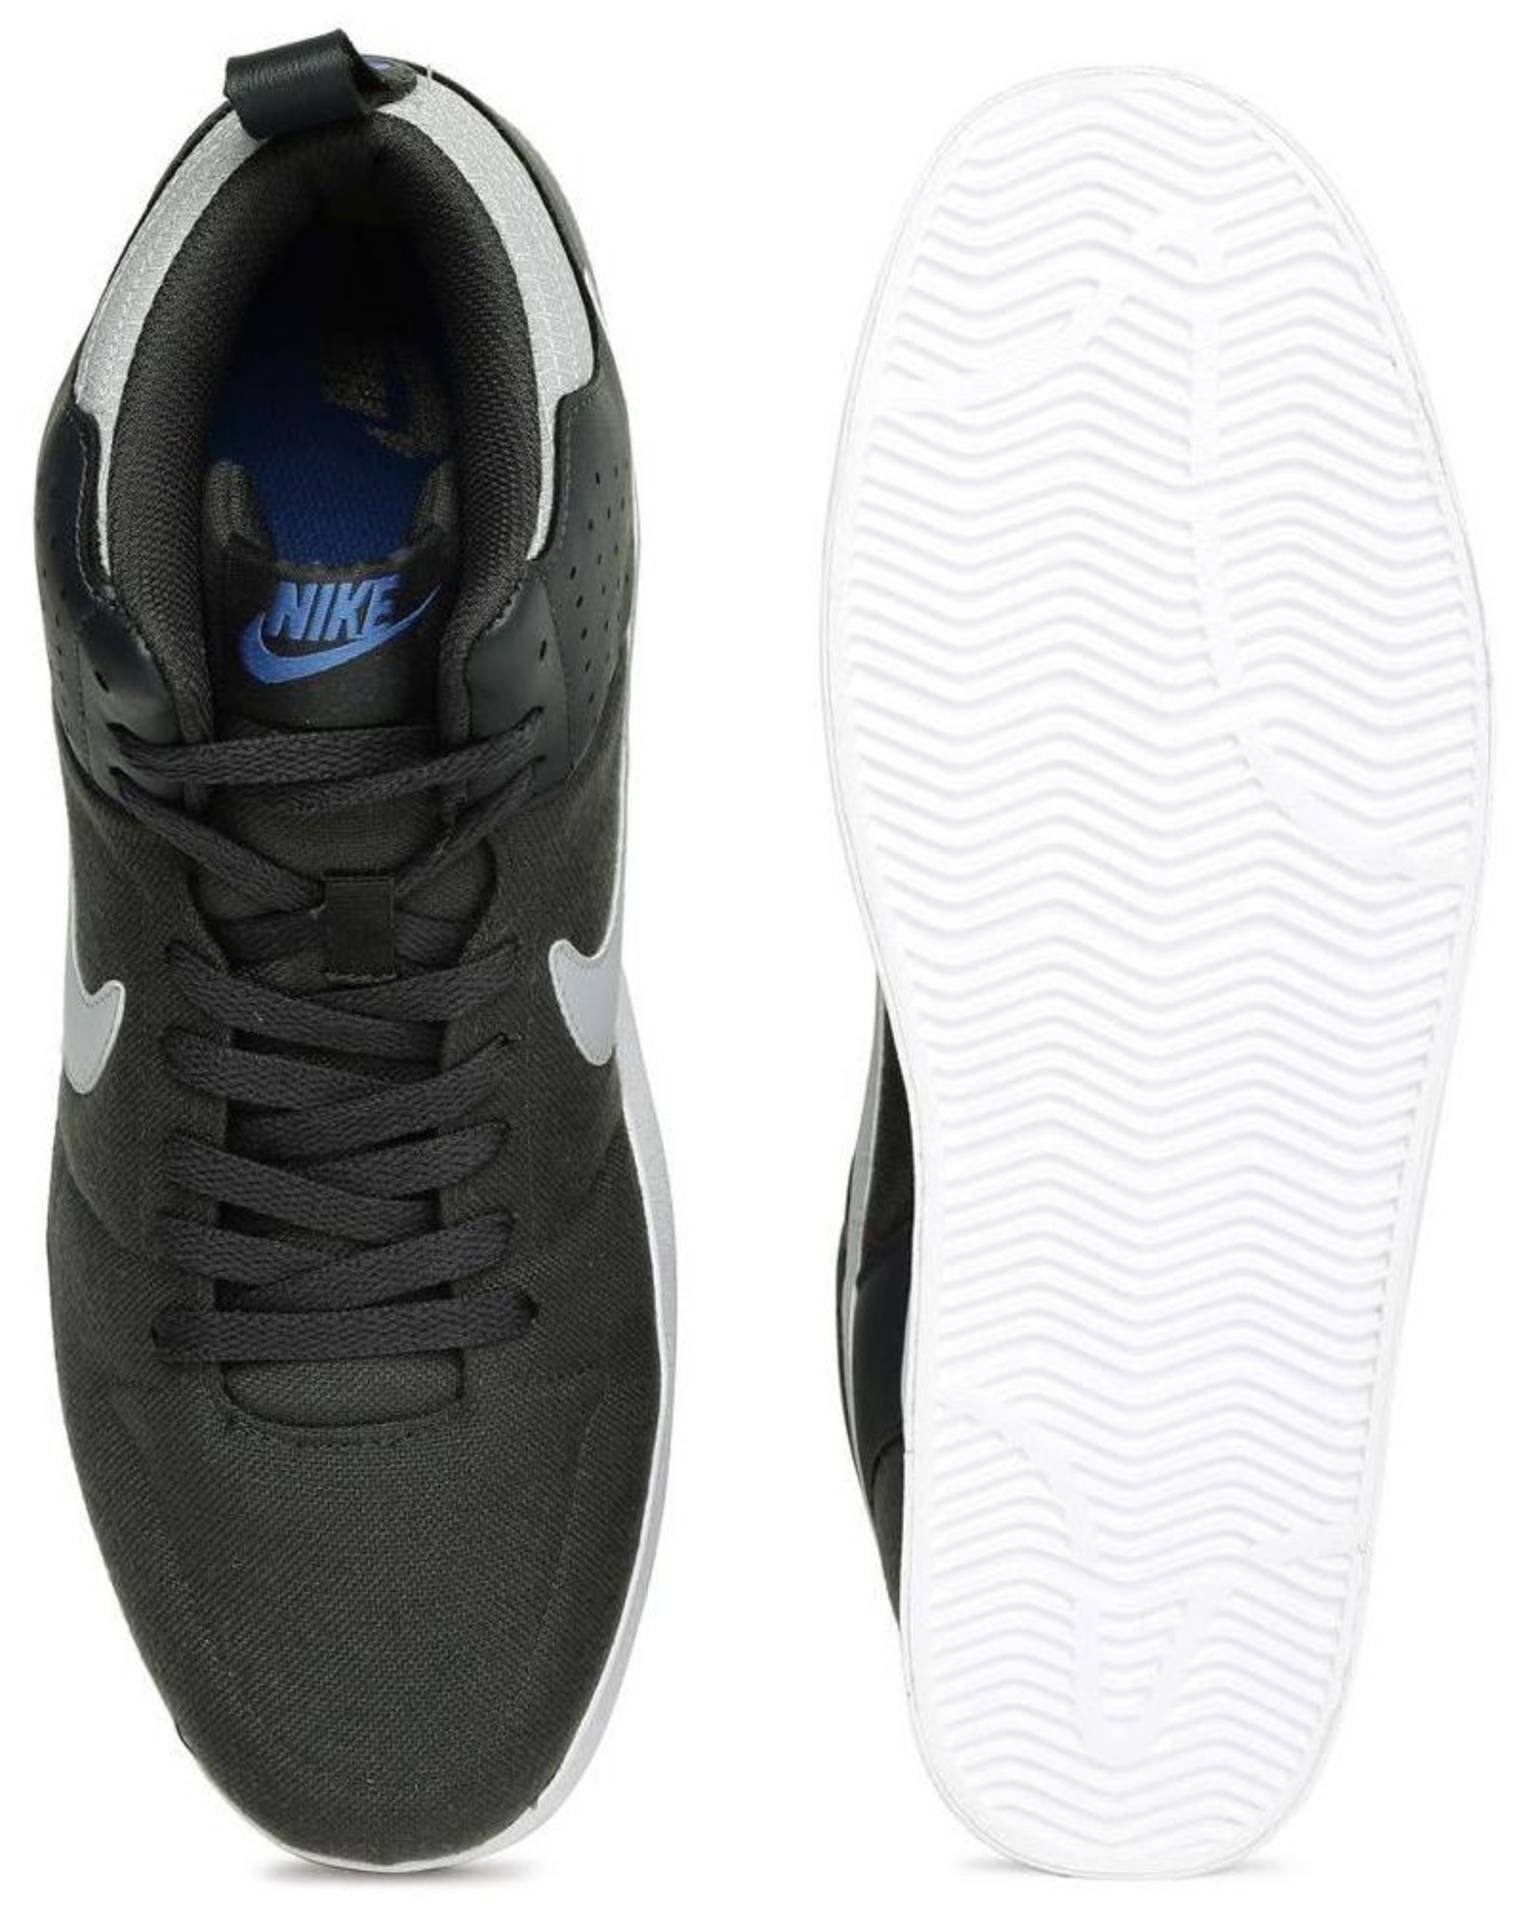 Buy Nike Men's Black Sneakers Online @ ₹3695 from ShopClues